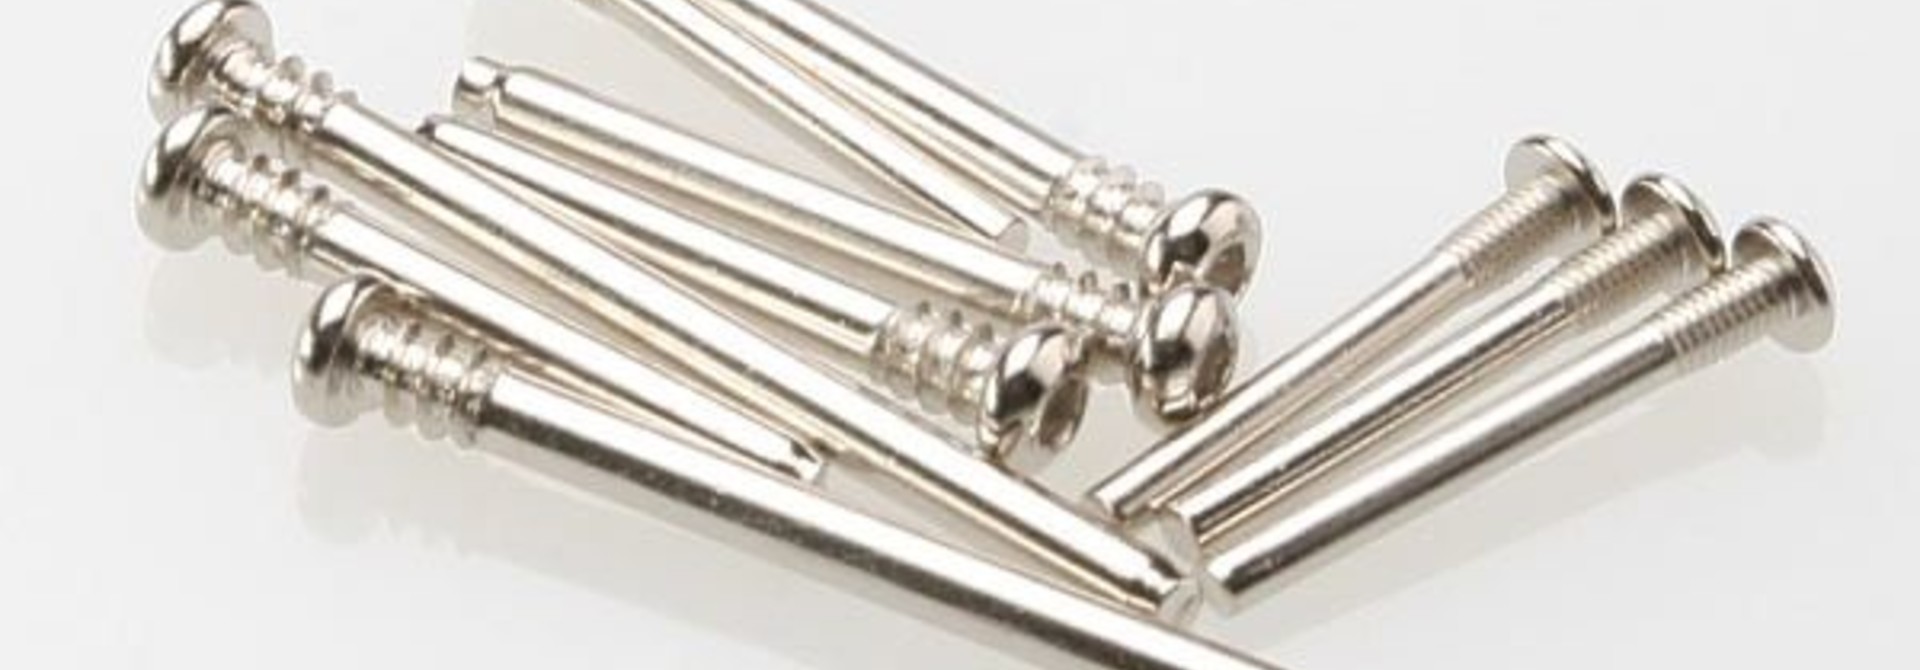 Suspension screw pin set, steel (hex drive) (requires part #, TRX3640